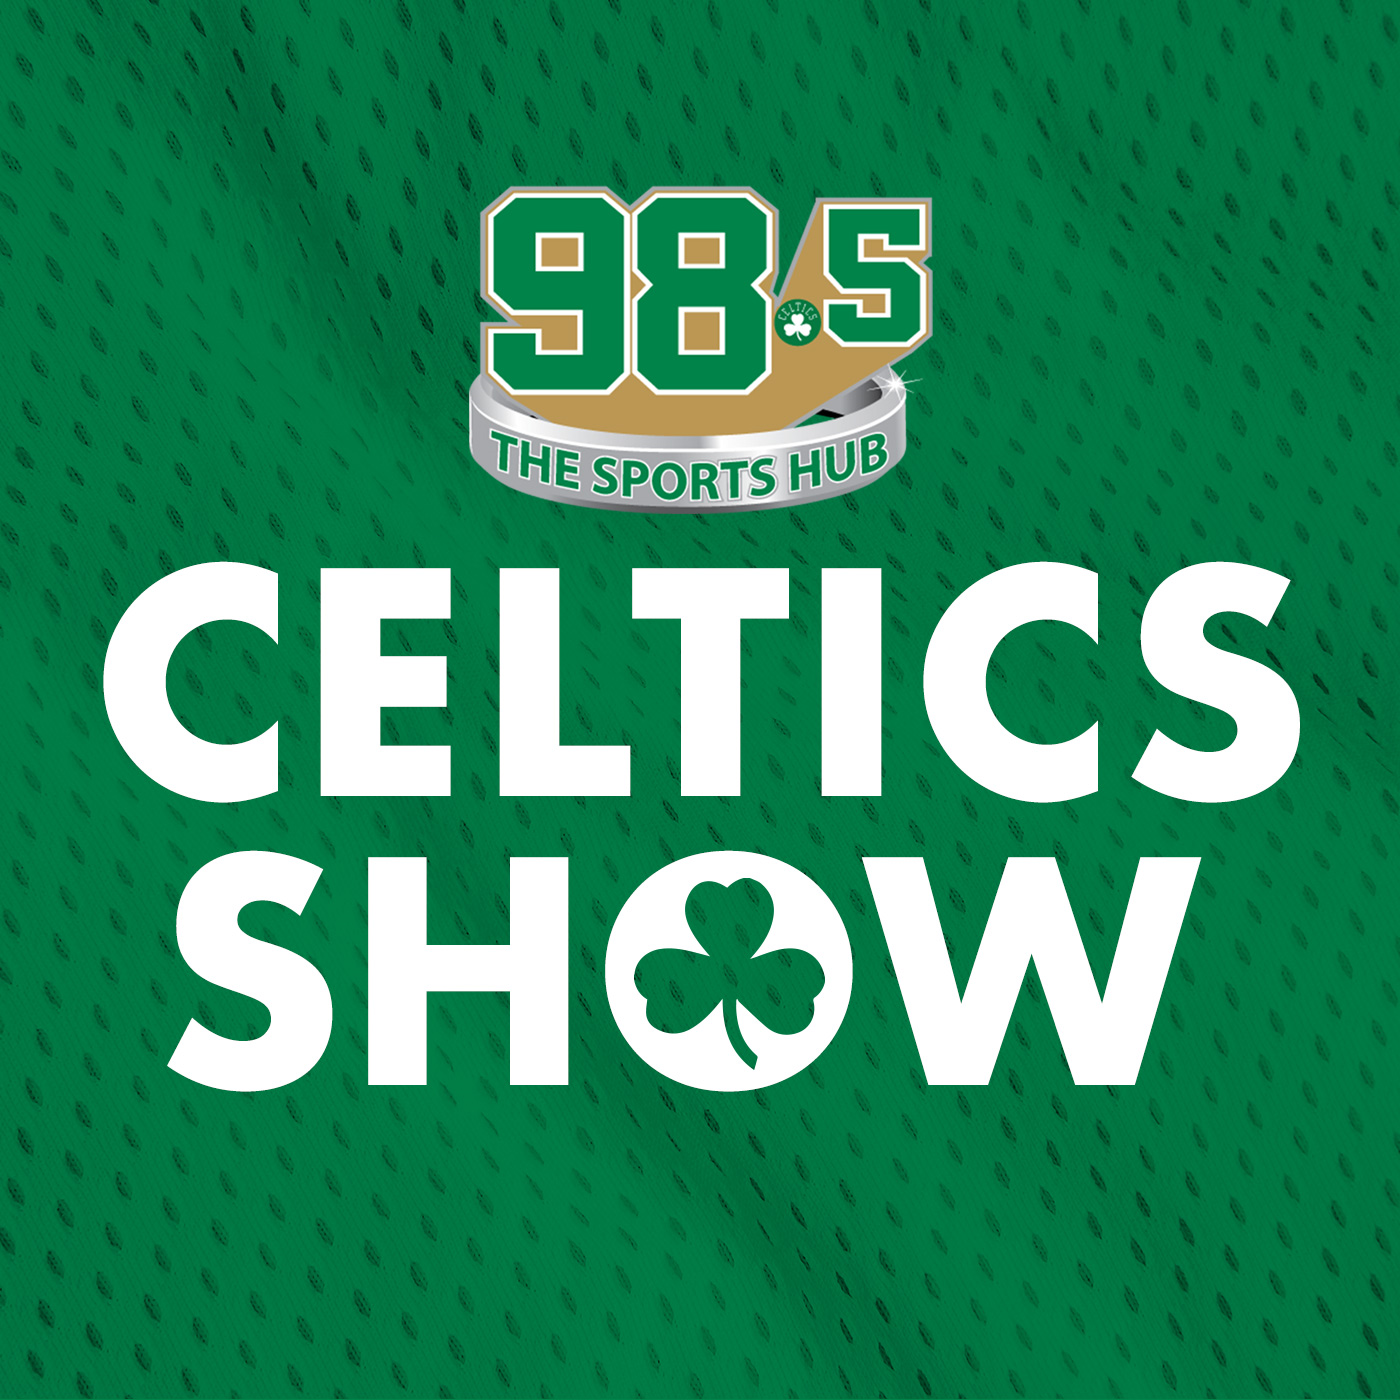 Celtics beat Nets // Joe Mazzulla // In-season tournament thoughts